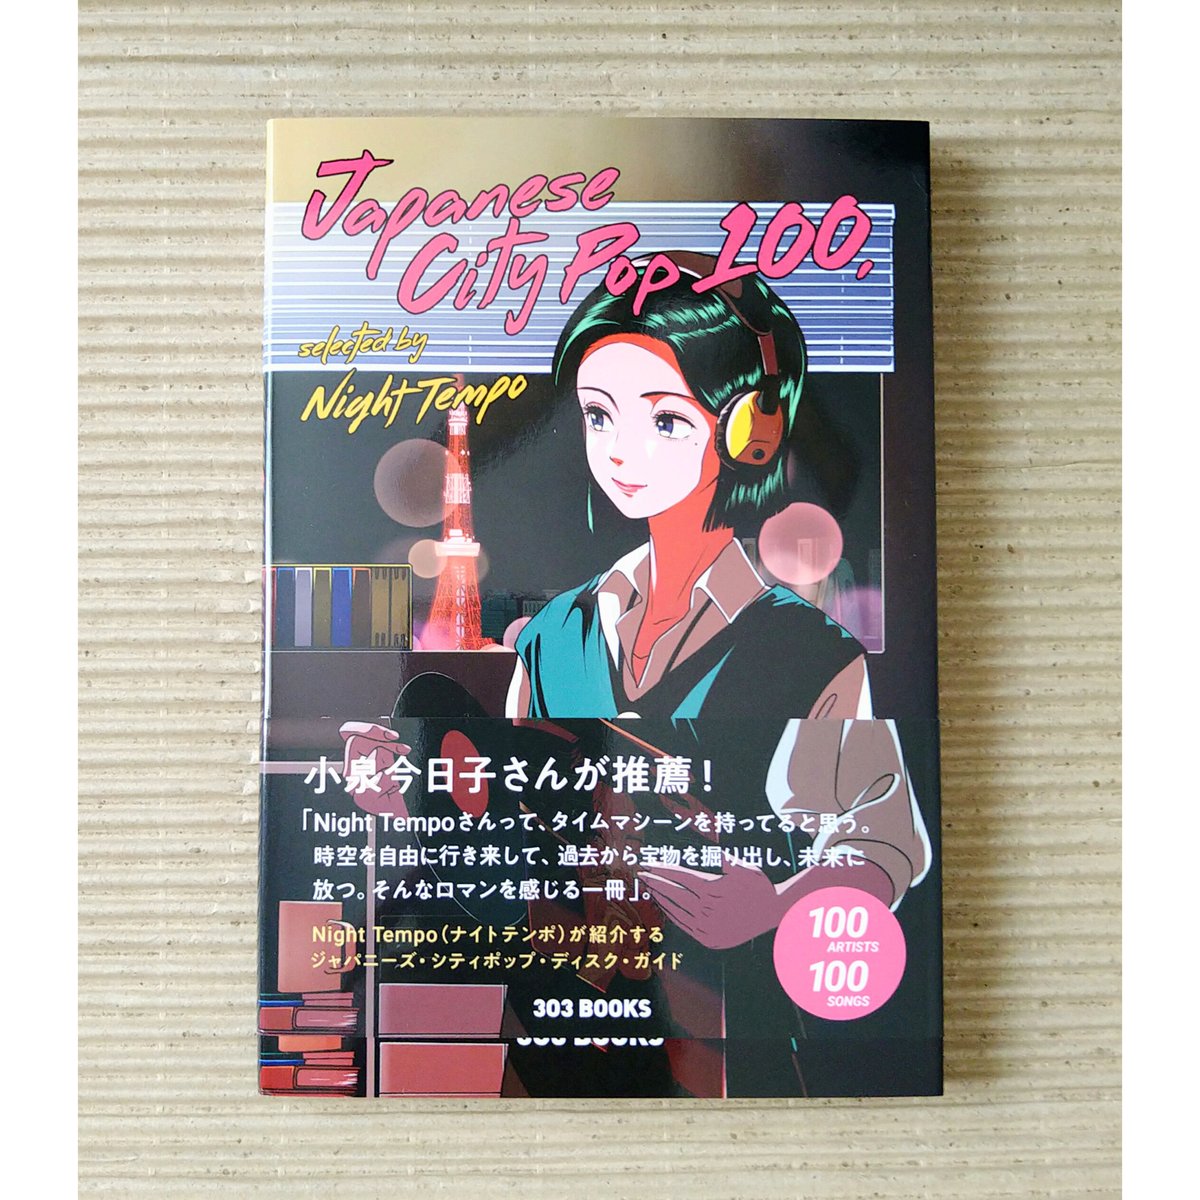 Japanese City Pop 100 (サイン本) 絵本日和の本棚